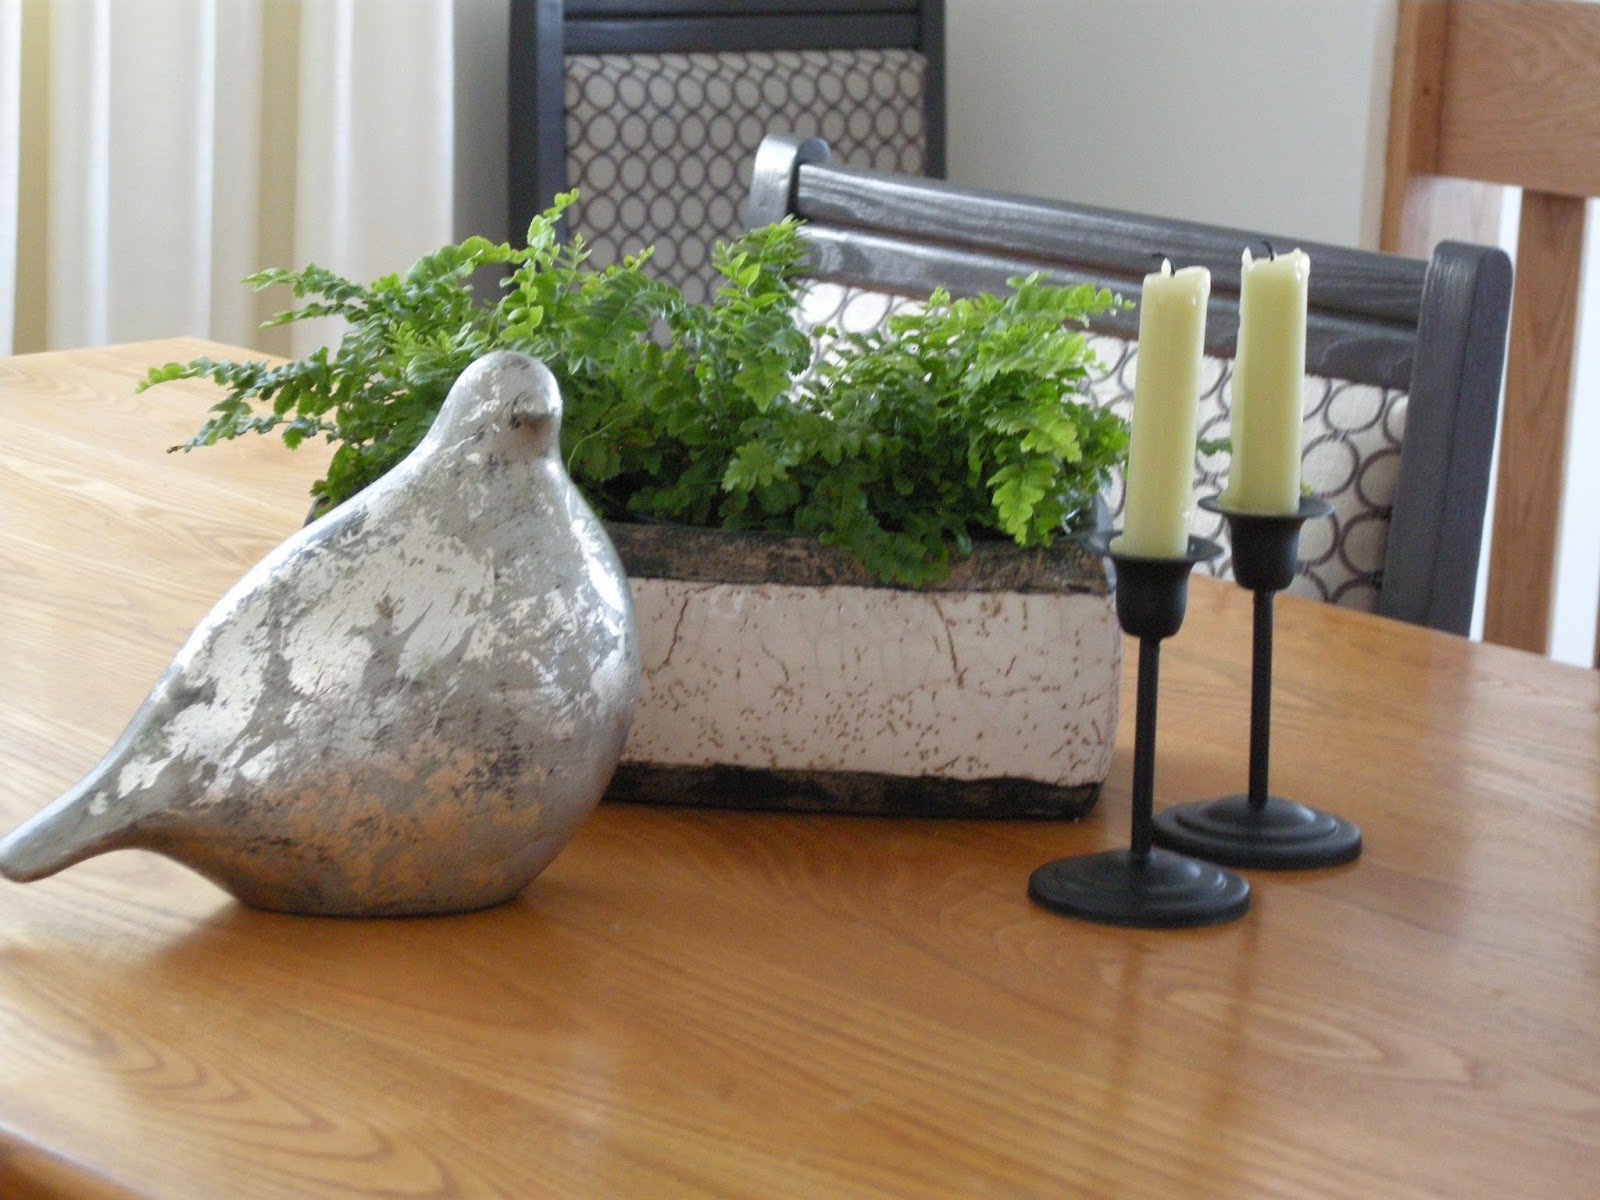 silver leaf bird, candles, boston ferns, trough planter, dining table, centrepiece